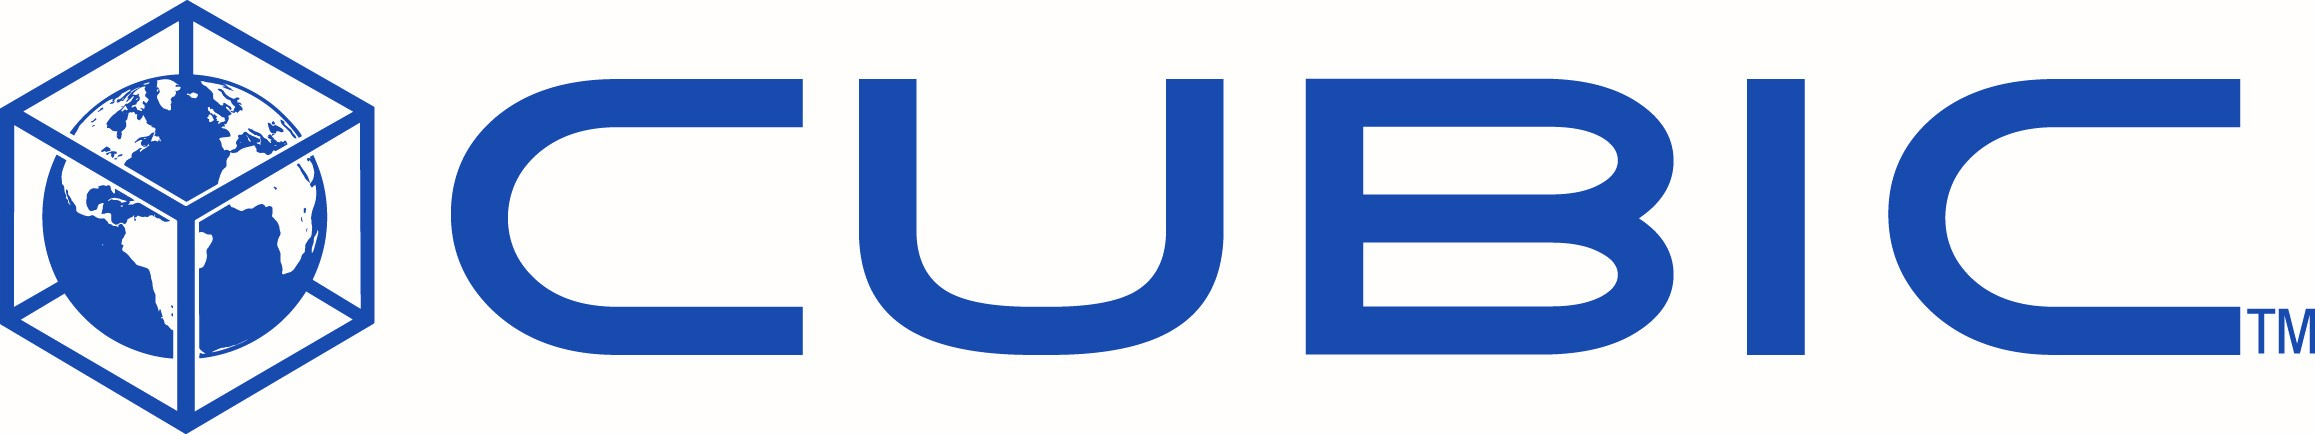 Cubic Corporation Logo 2